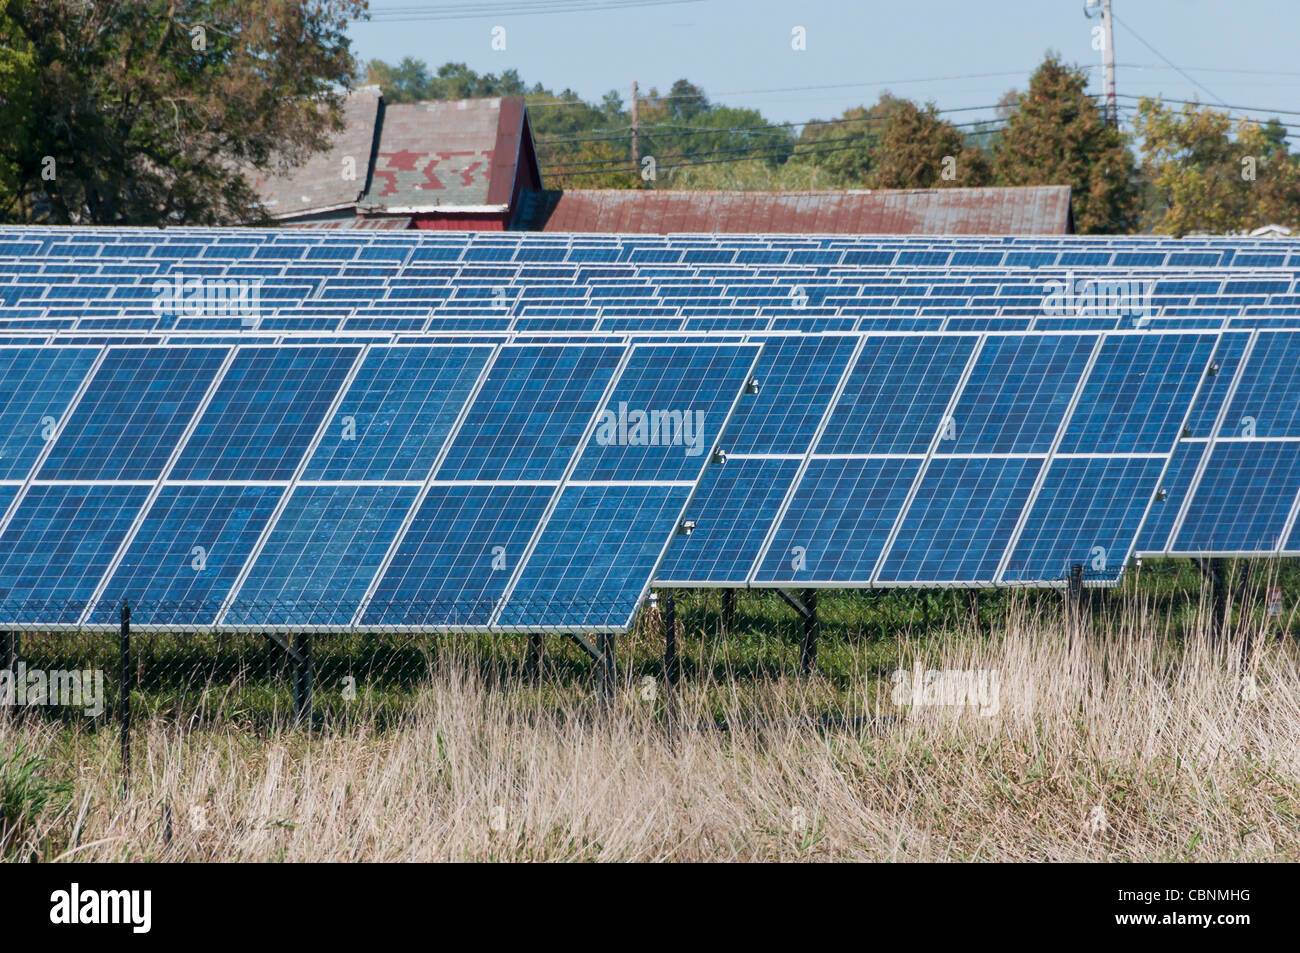 solar-energy-panels-vermont-usa-stock-photo-alamy